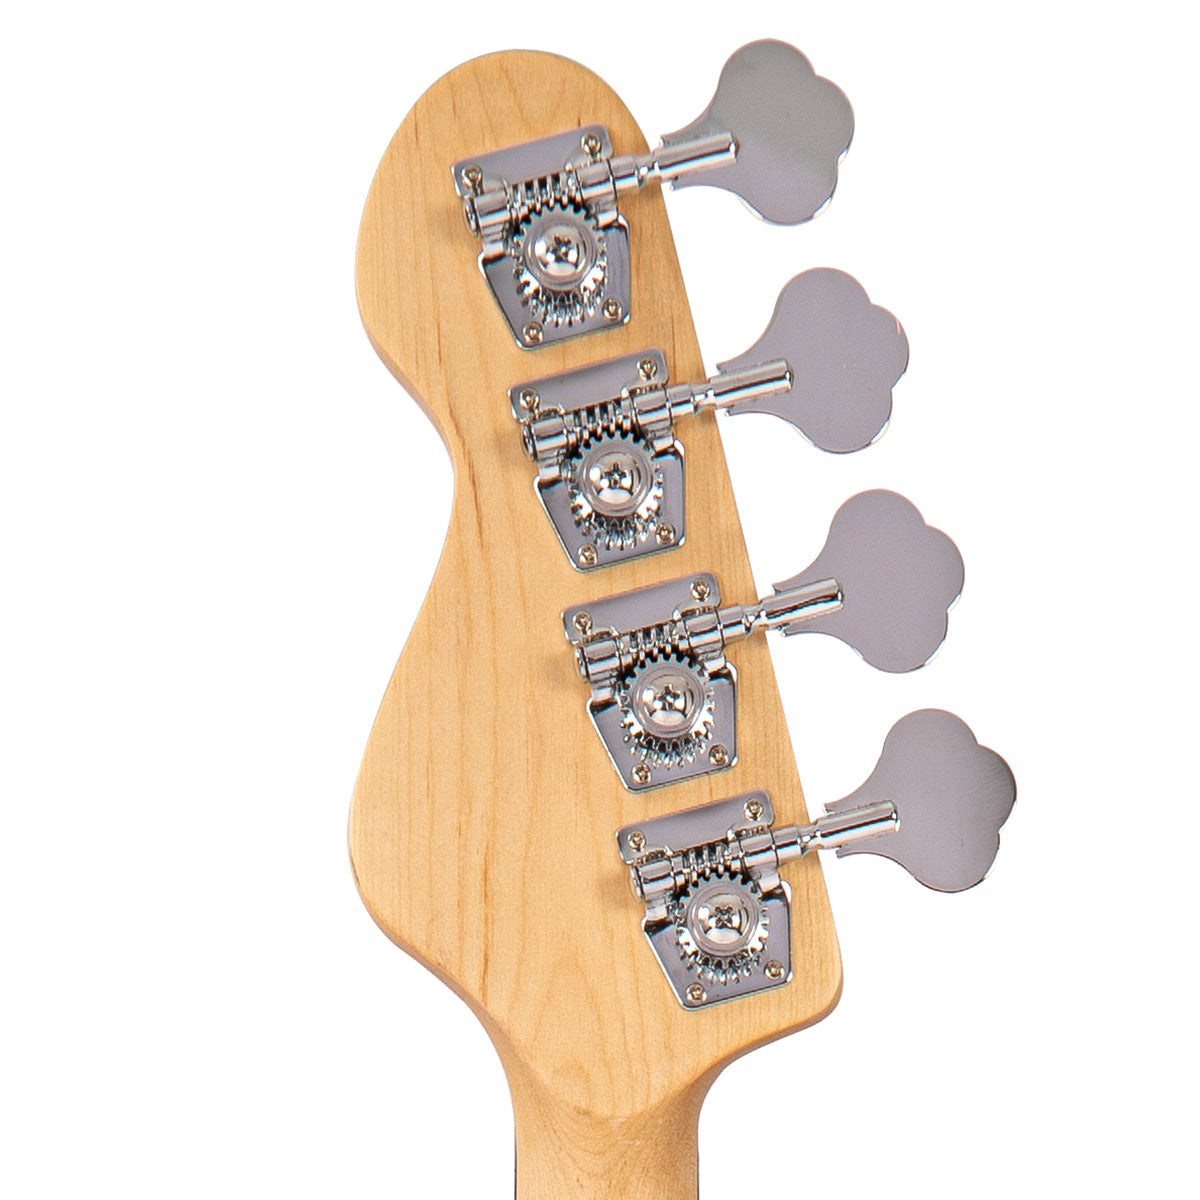 Vintage V40 Coaster Series Bass Guitar ~ 3 Tone Sunburst, Bass Guitars for sale at Richards Guitars.